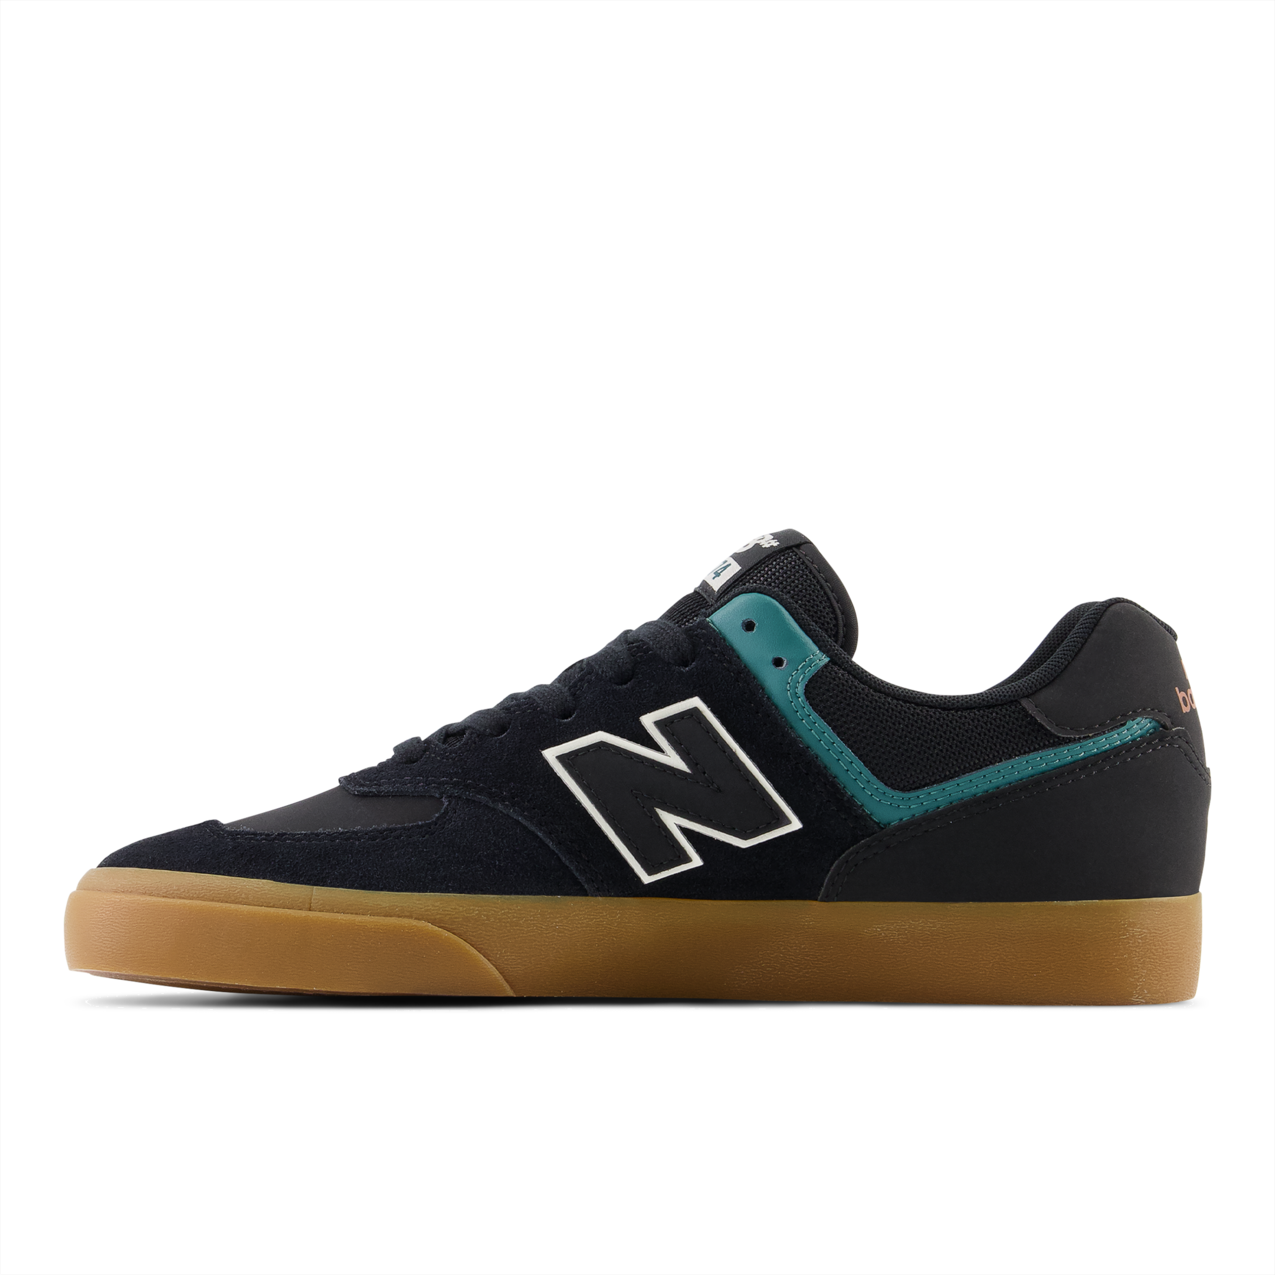 New Balance Numeric Men's 574 Vulc Black Teal Shoes